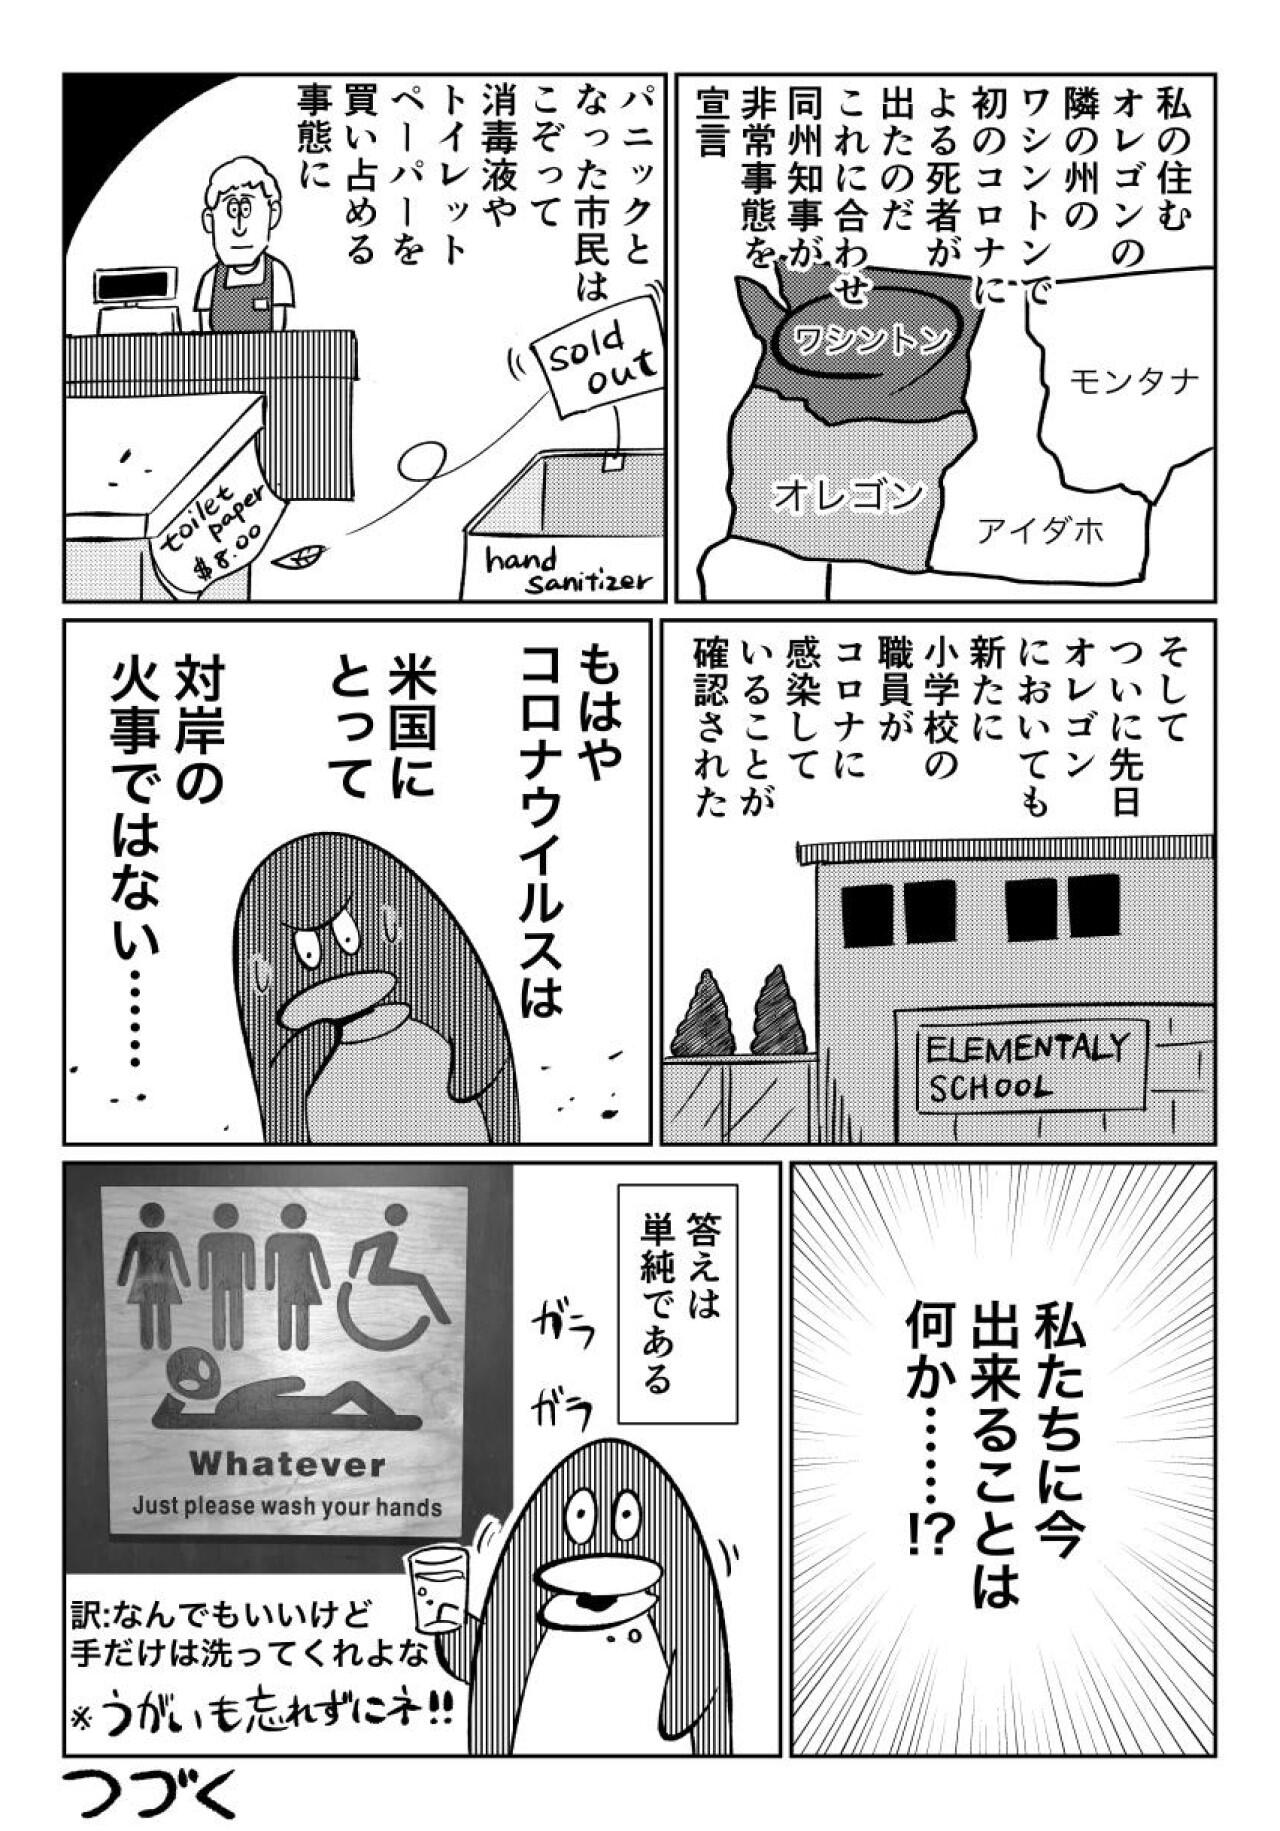 https://www.ryugaku.co.jp/column/images/34sai_ex7_2_1280.jpg